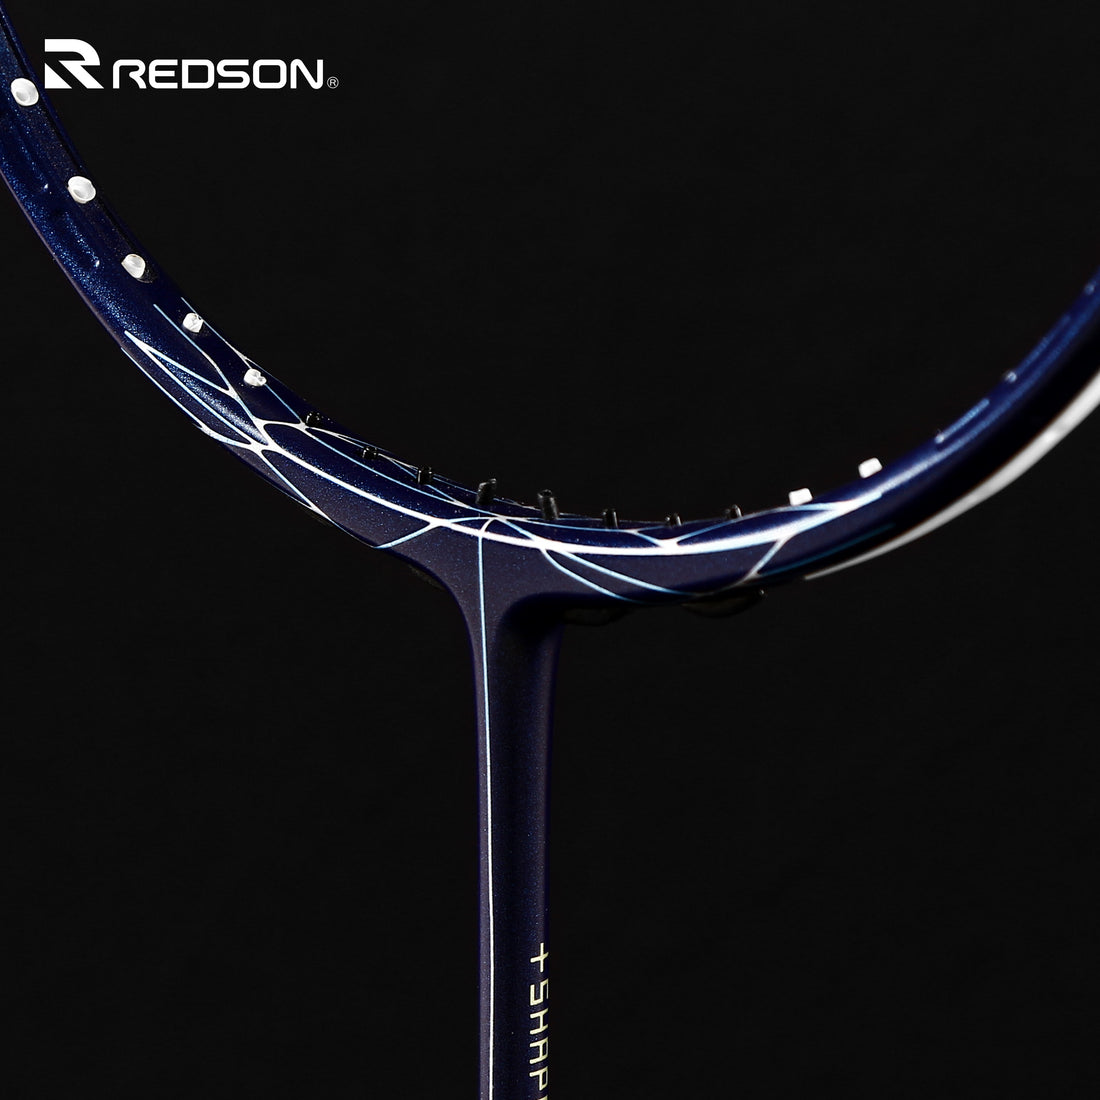 Redson Shape SG 3U Badminton Racket (Blue)